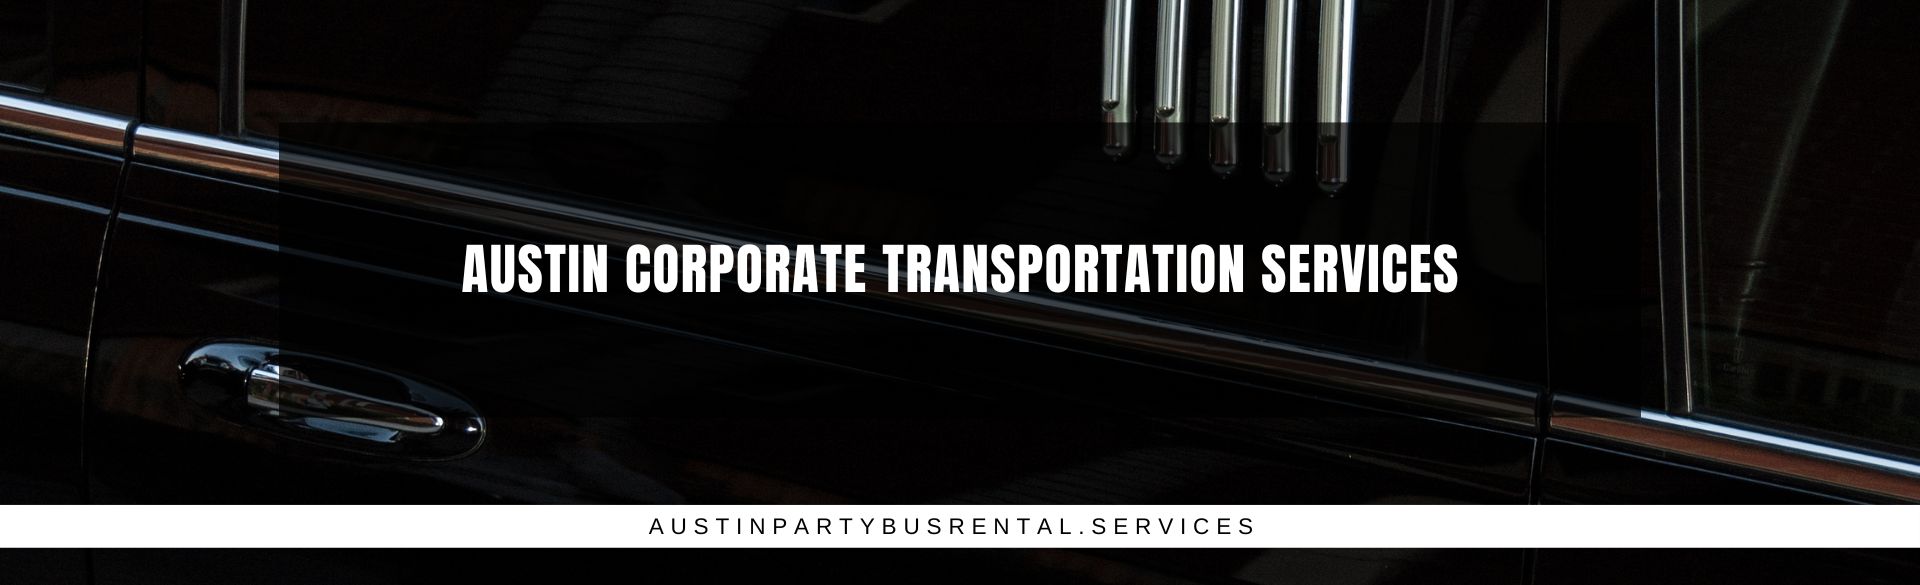 Austin Corporate Transportation Services